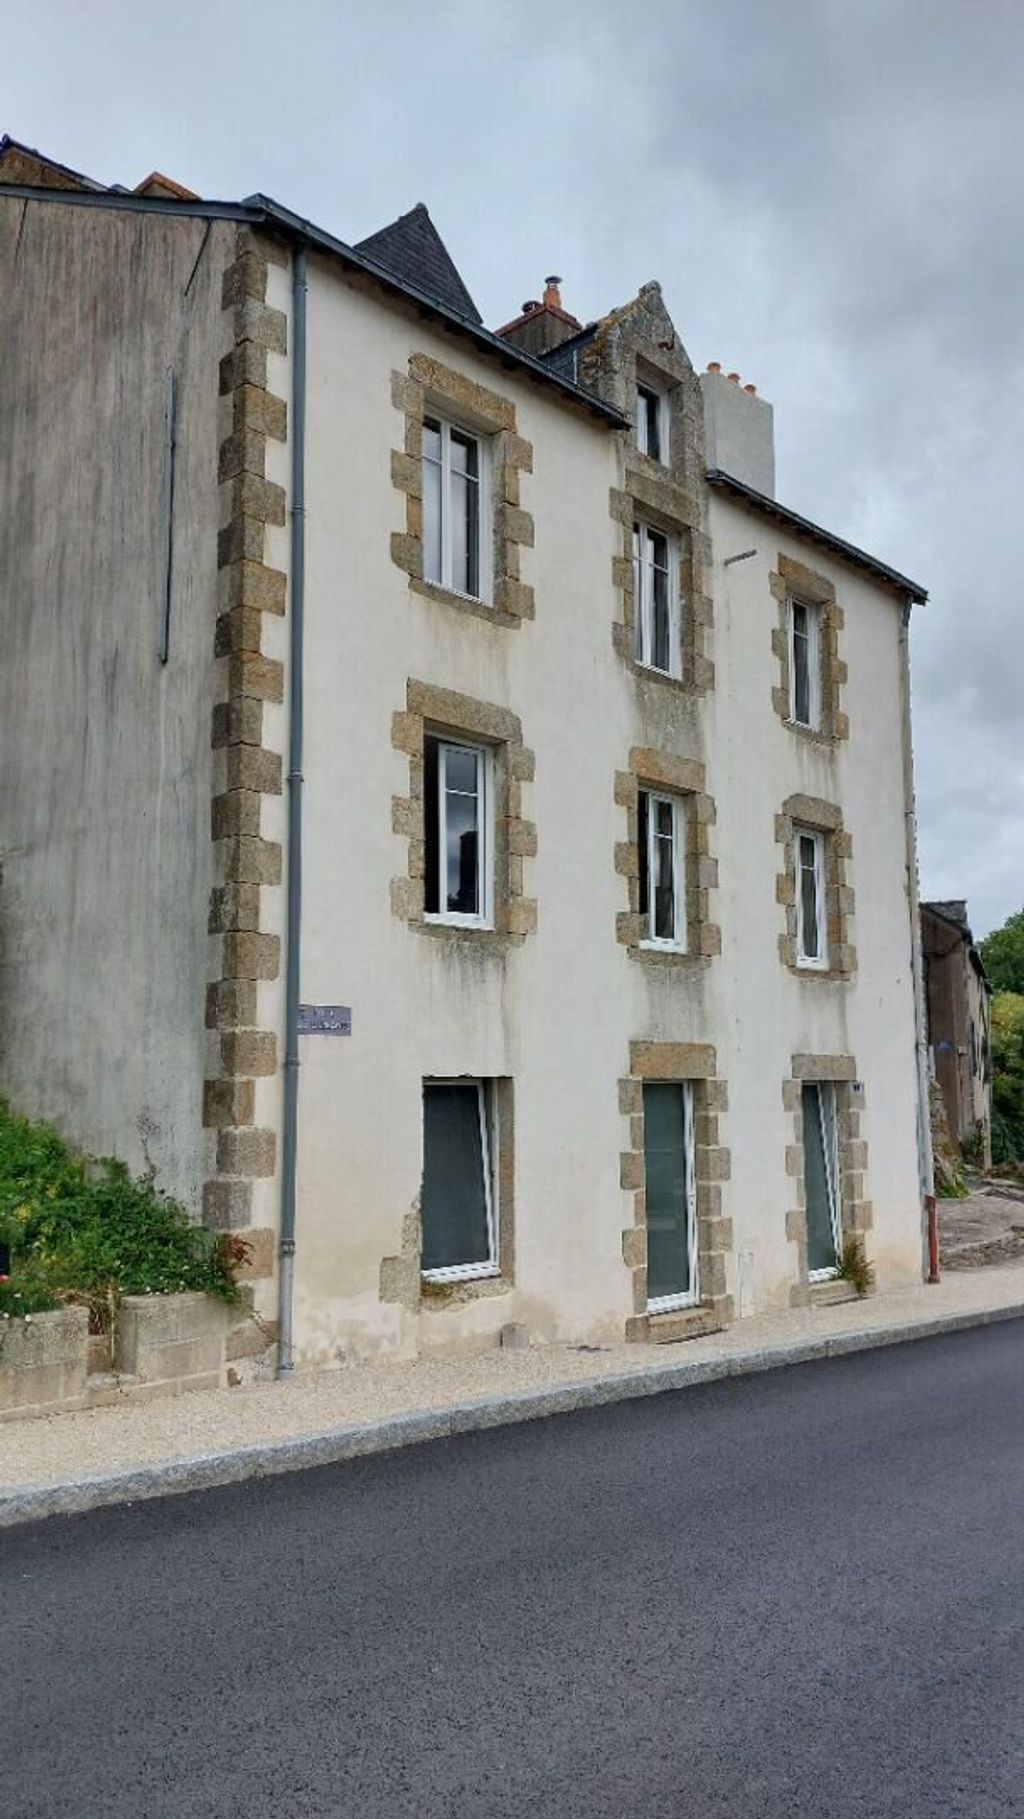 Achat maison à vendre 2 chambres 75 m² - La Roche-Bernard